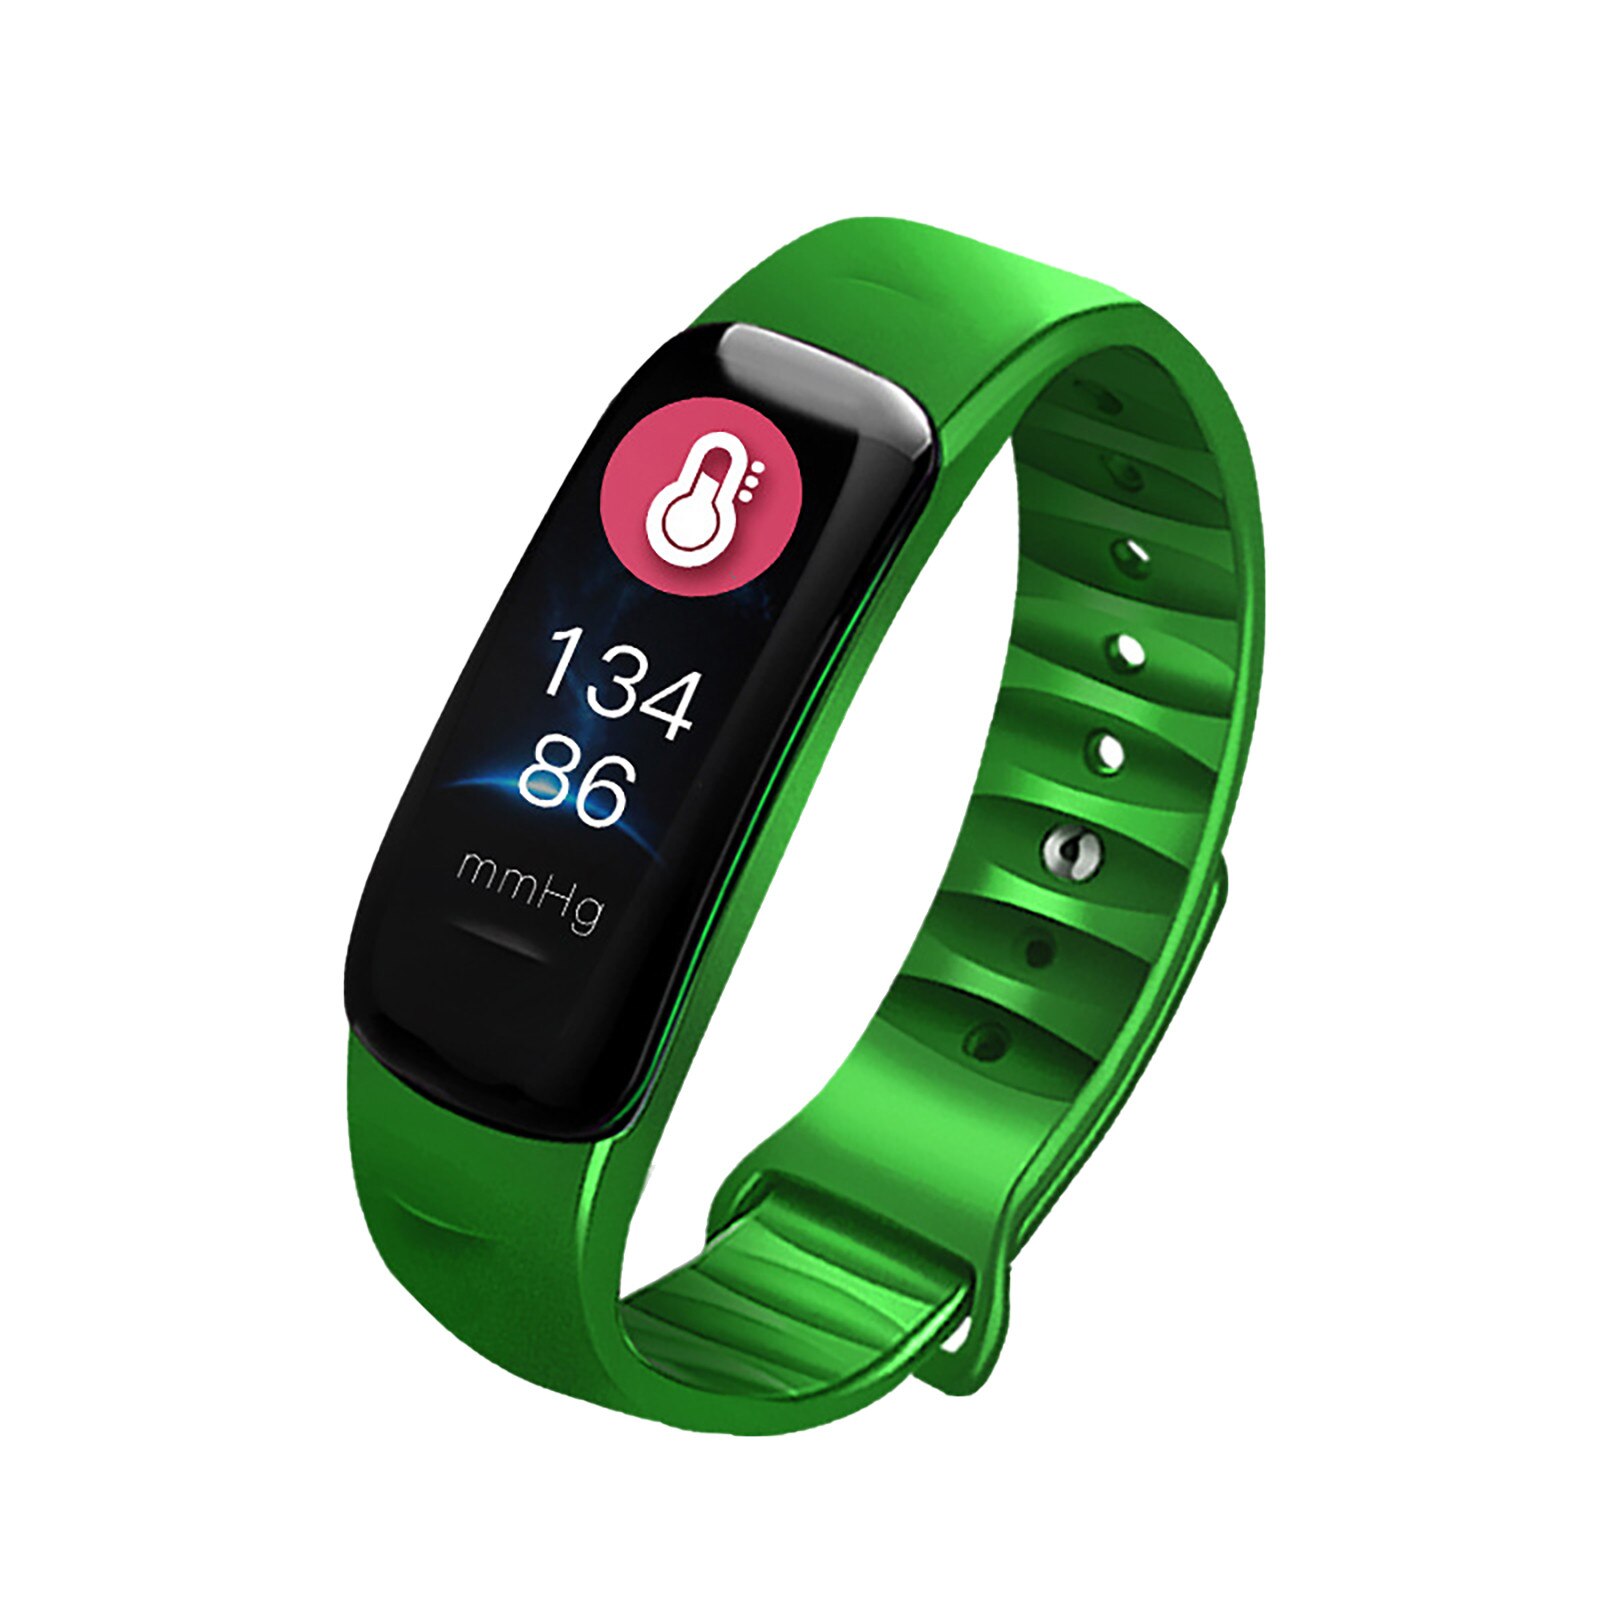 Sport Smart Wrist Watch Bracelet Display Fitness Gauge Step Tracker Digital LCD Pedometer Run Step Walking Calorie Counter: green